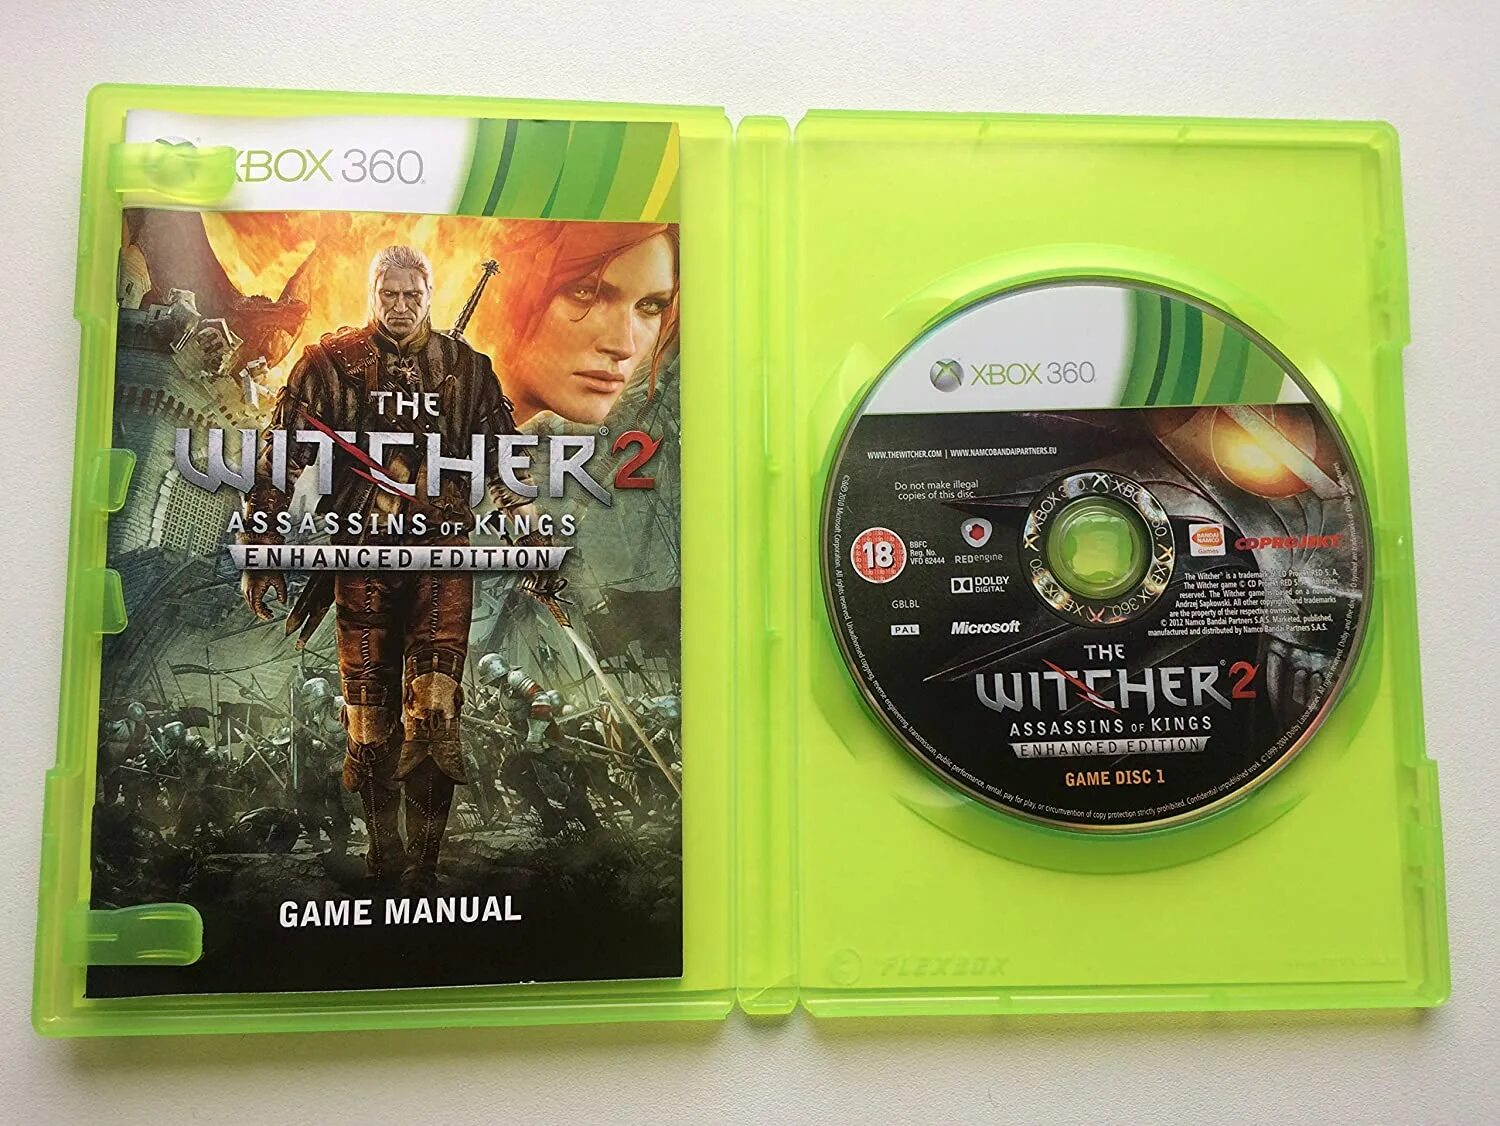 Xbox ведьмак купить. Ведьмак 2 Икс бокс 360. Ведьмак 2 Xbox 360. The Witcher 2 enhanced Edition Xbox 360. Ведьмак 2 расширенное издание Xbox 360.